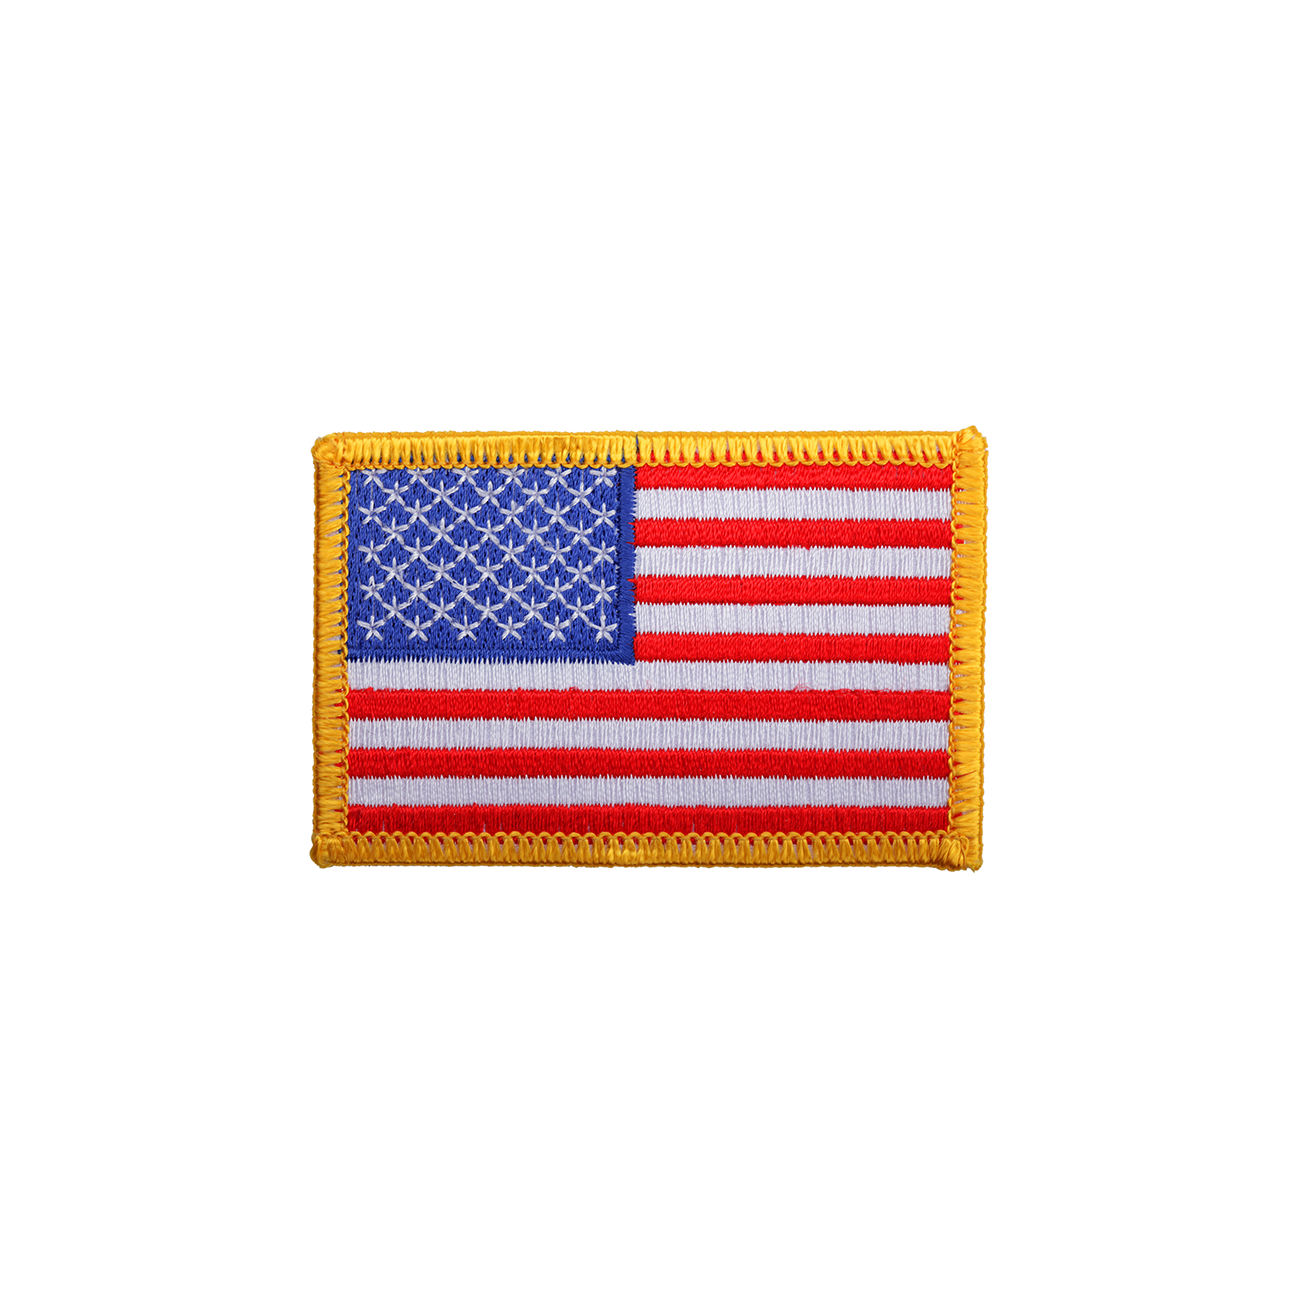 (2) US Flagge, farbig, Abzeichen